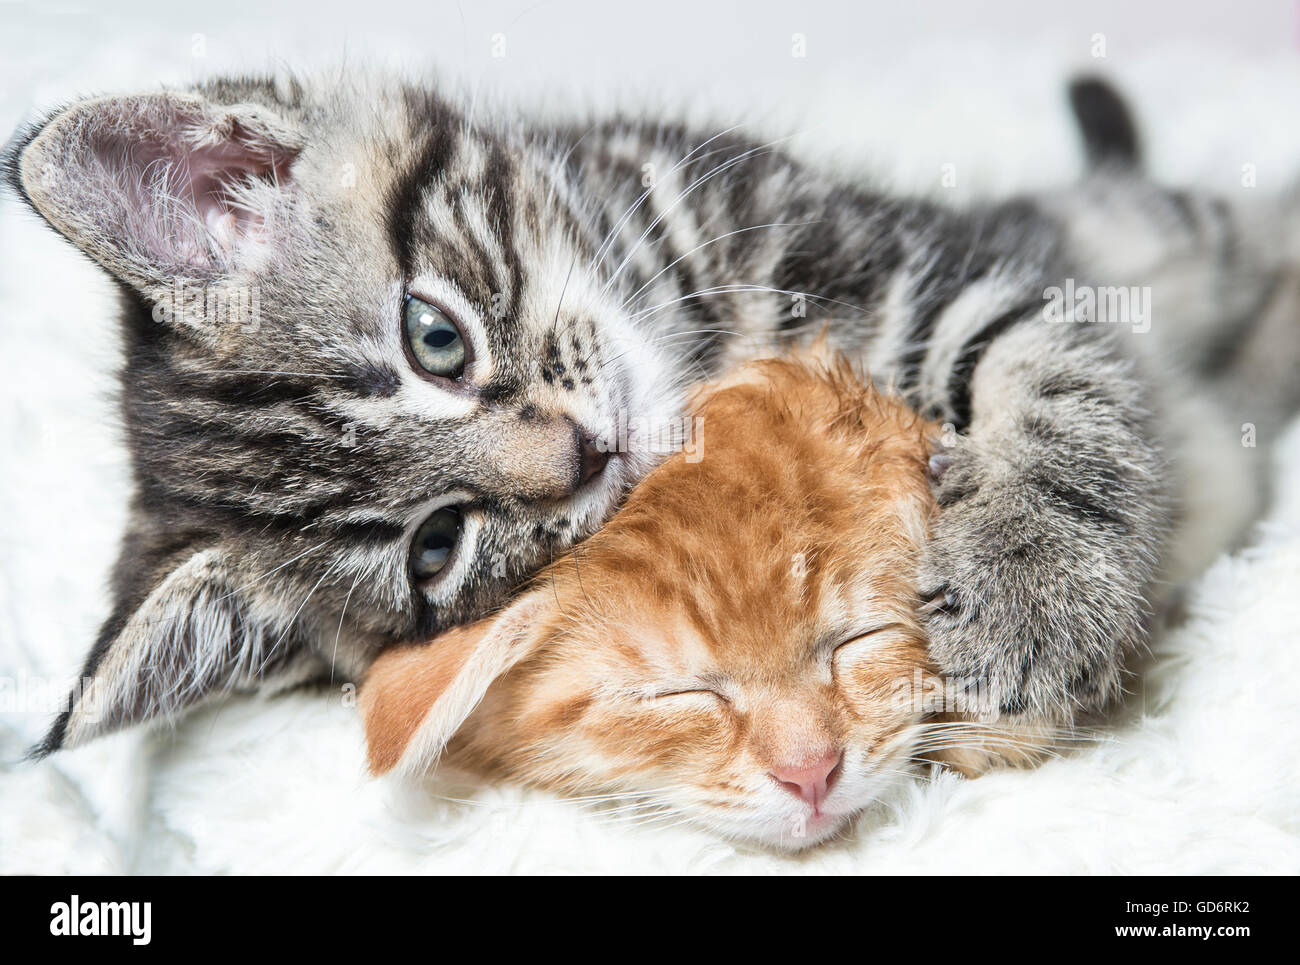 Two kittens cuddling Stock Photo